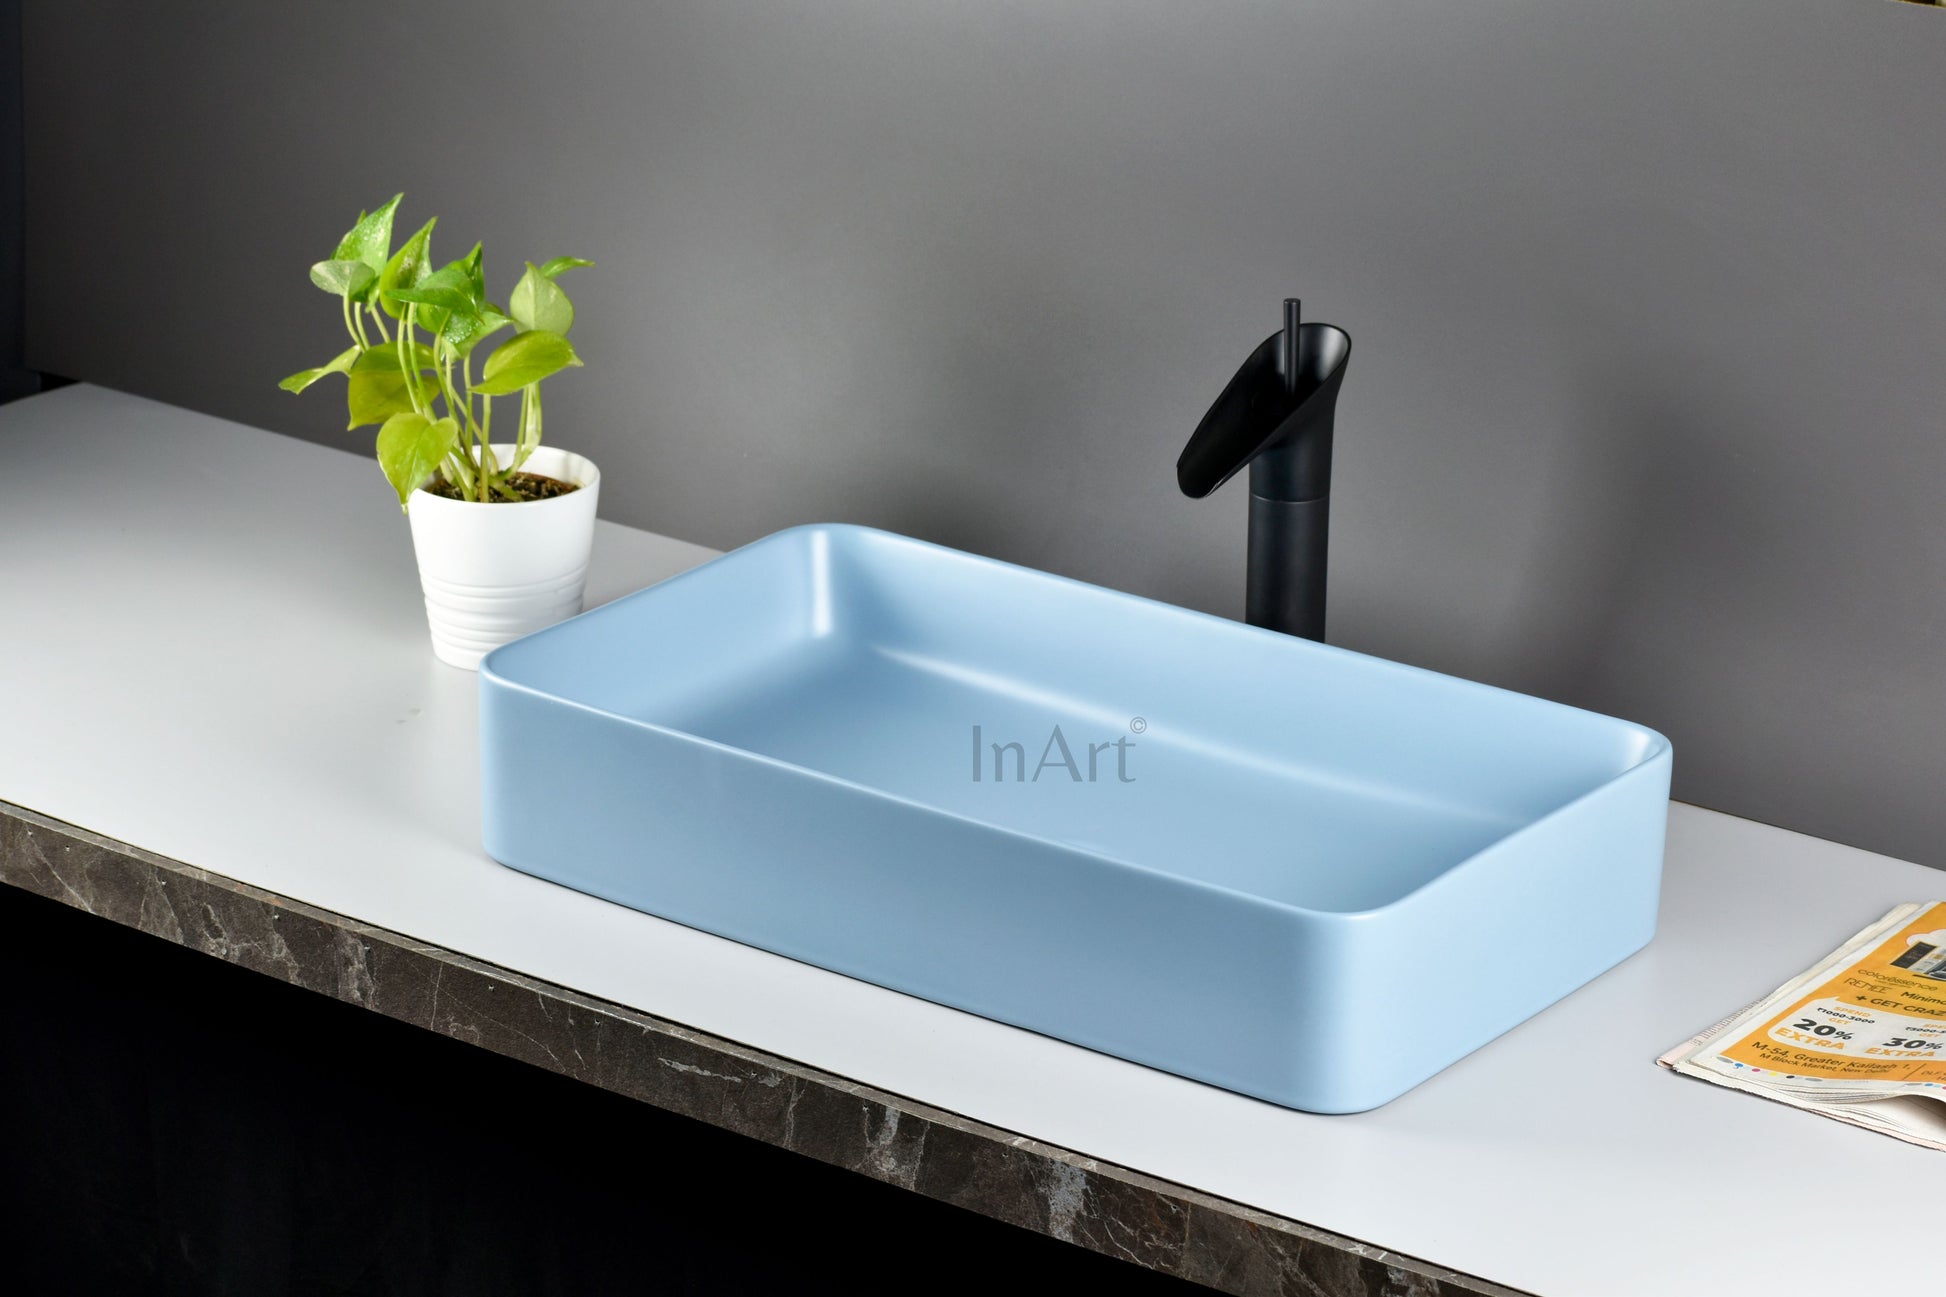 InArt Wash Basin Designer Counter Top Bathroom Sink - Vanity Wash Basin for Bathroom, Table Top Wash Basin 62 x 35 x 12 cm Matt Blue DW272 - InArt-Studio